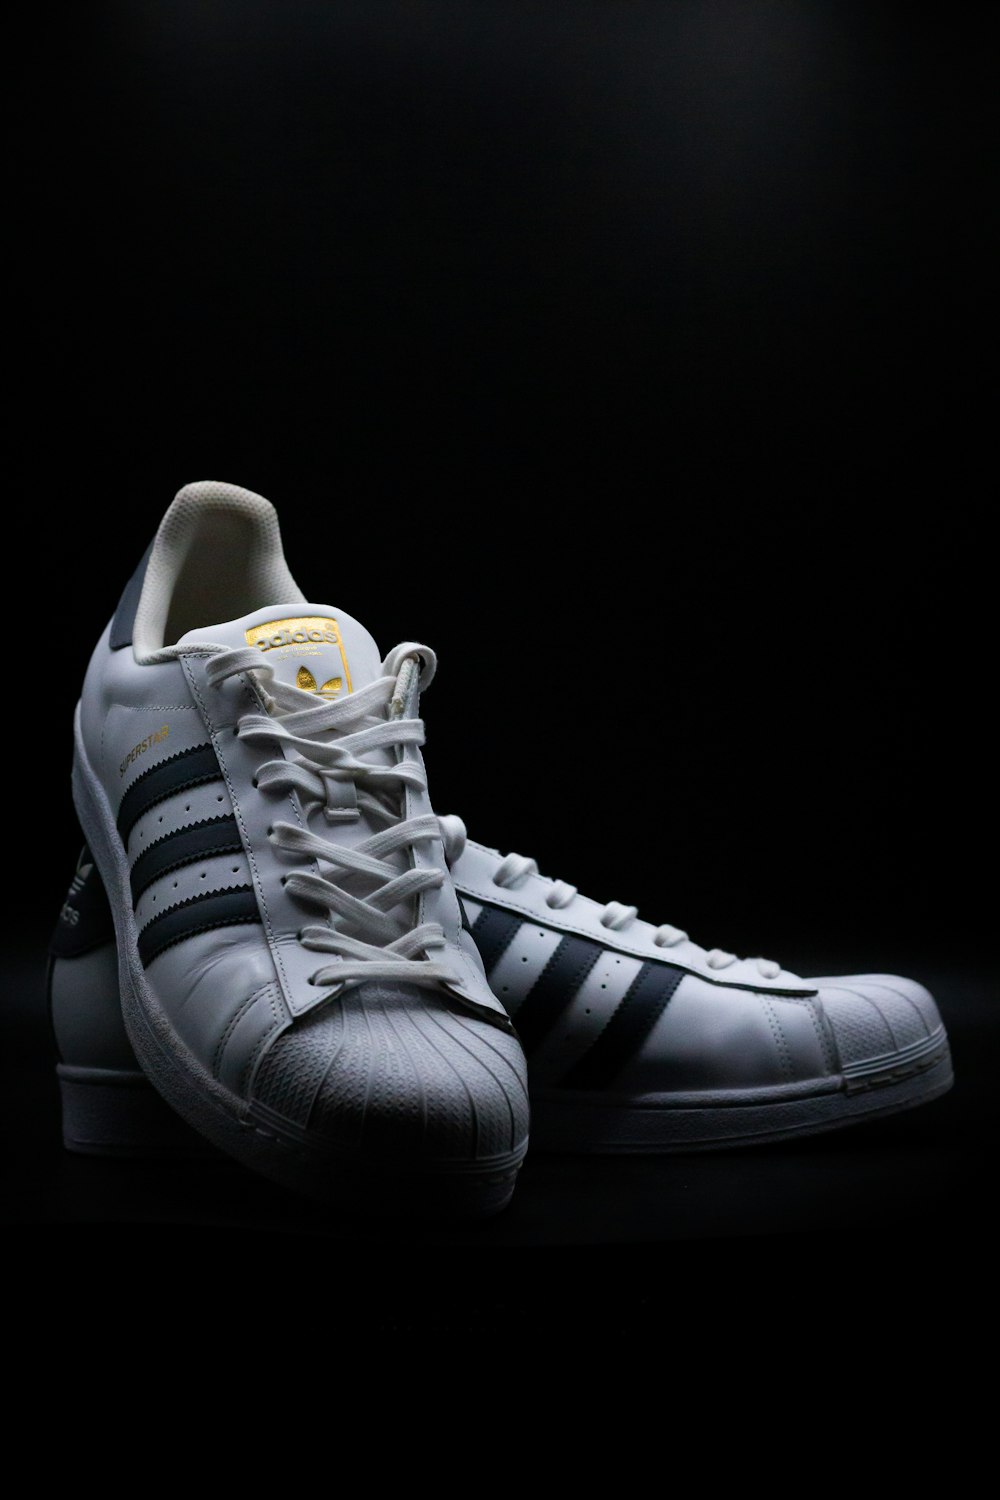 Black and white adidas sneakers photo – Free Grey Image on Unsplash